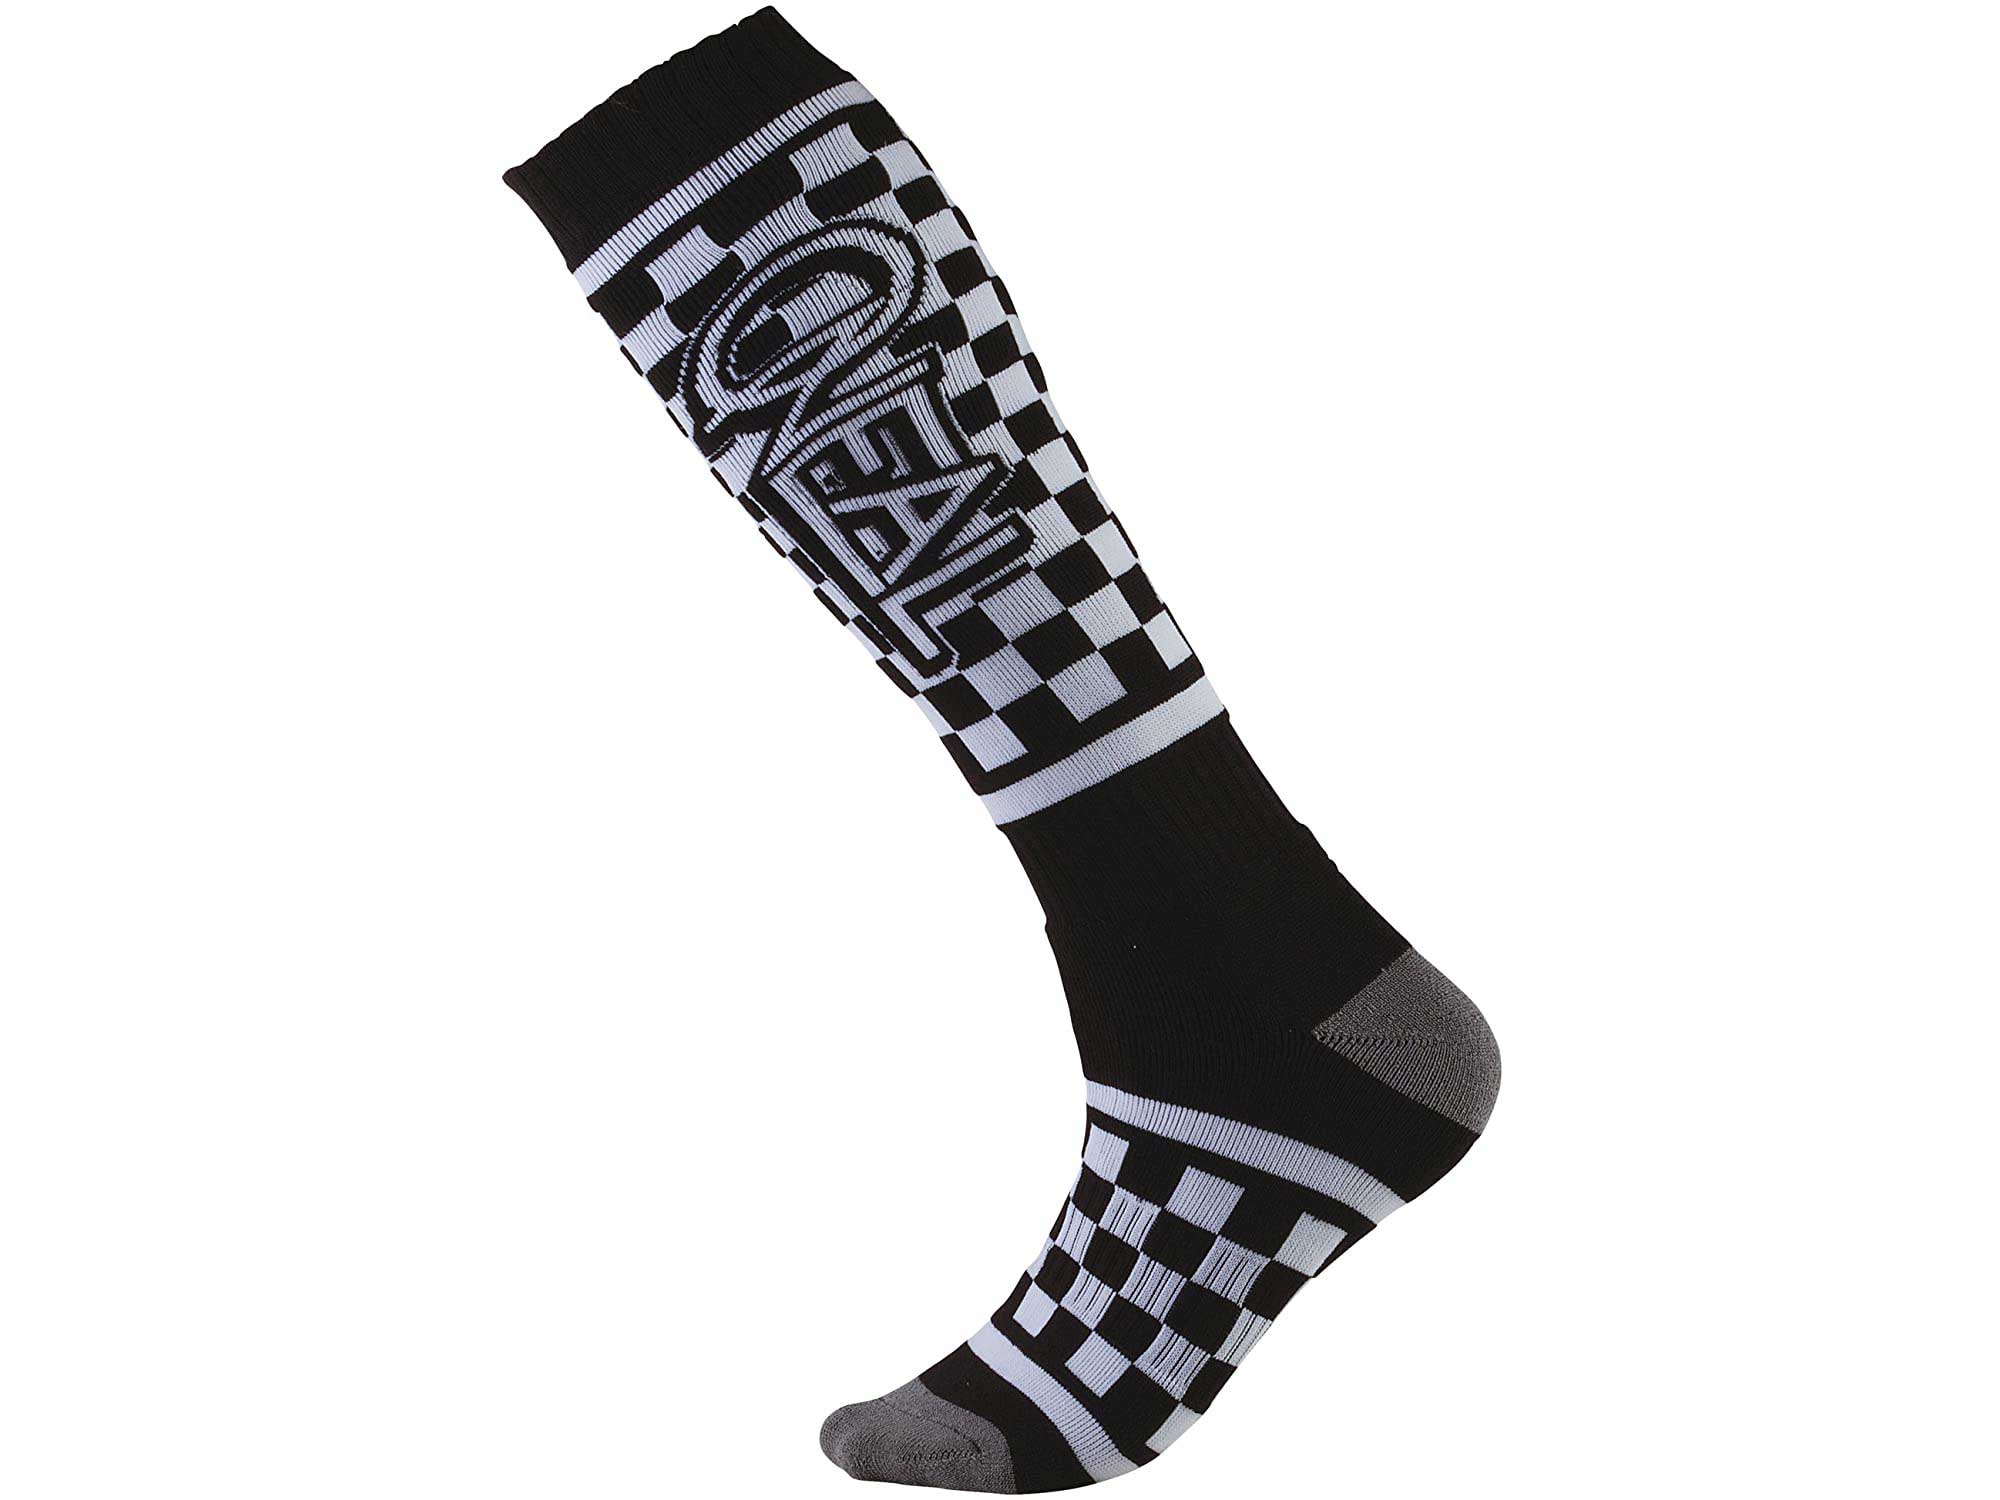 Bike-It Moto GP Motorcycle Road White Race Boot Socks Summer Socks One Size